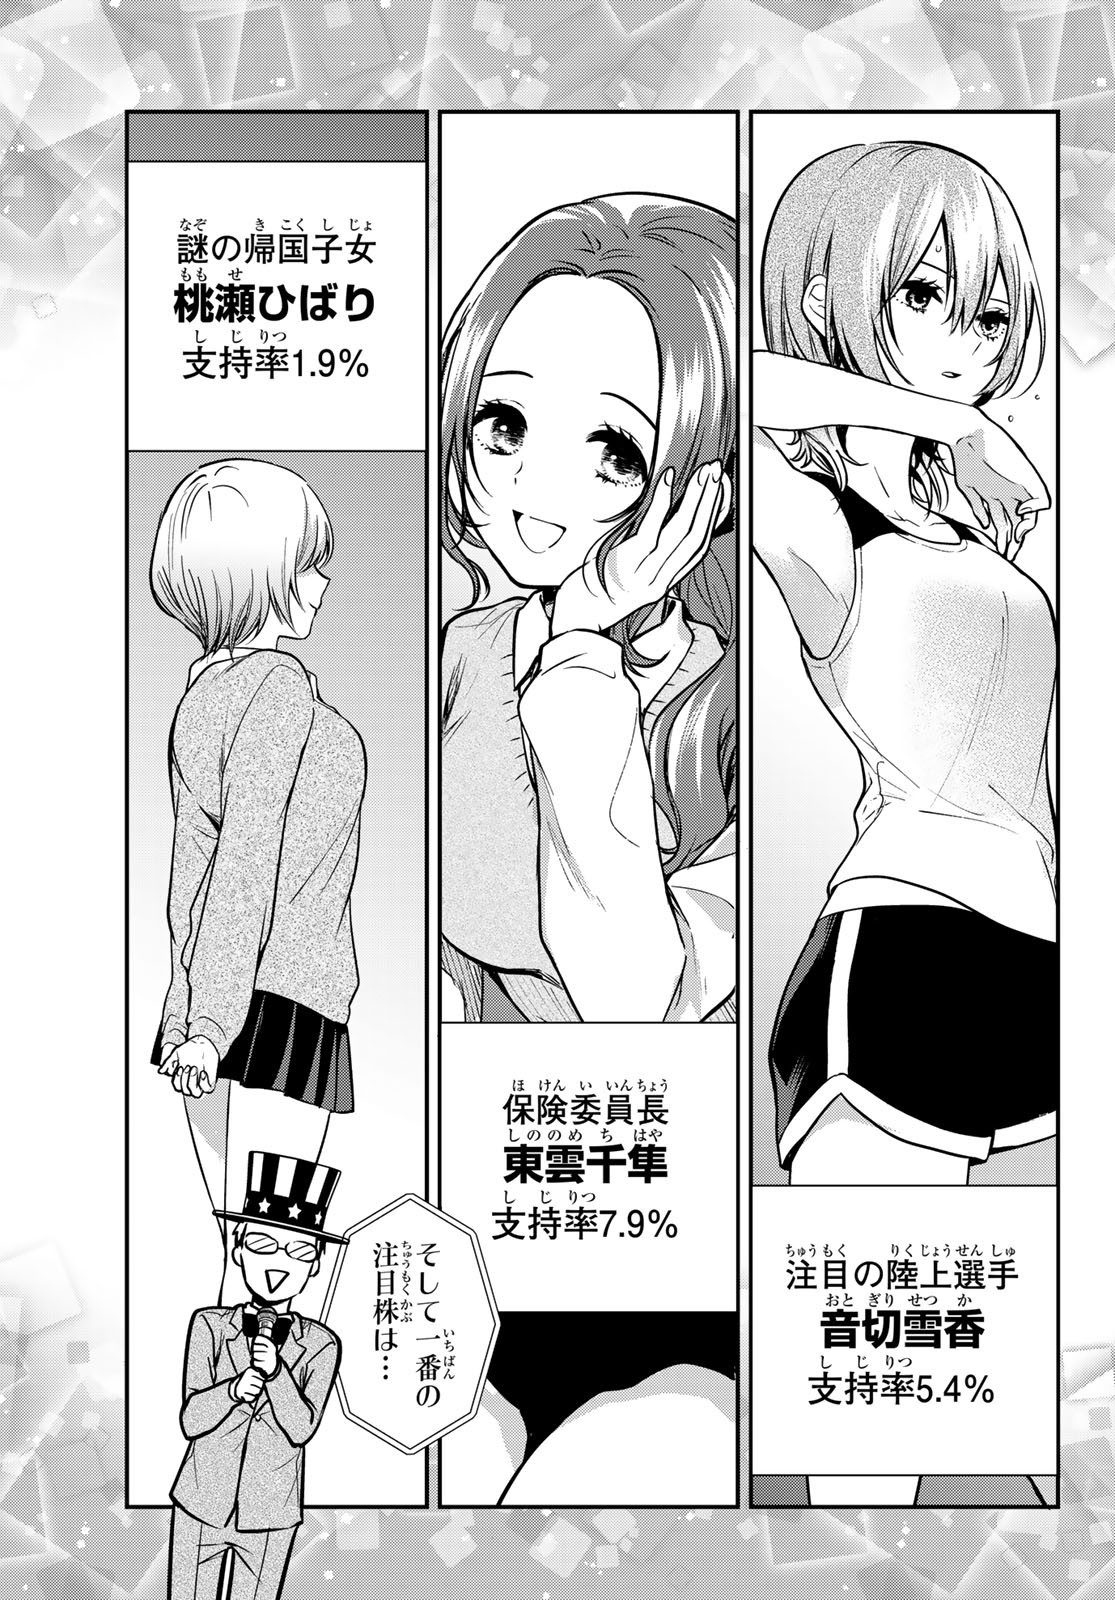 Kimi ga Megami Nara Ii no ni (I Wish You Were My Muse) - Chapter 002 - Page 3